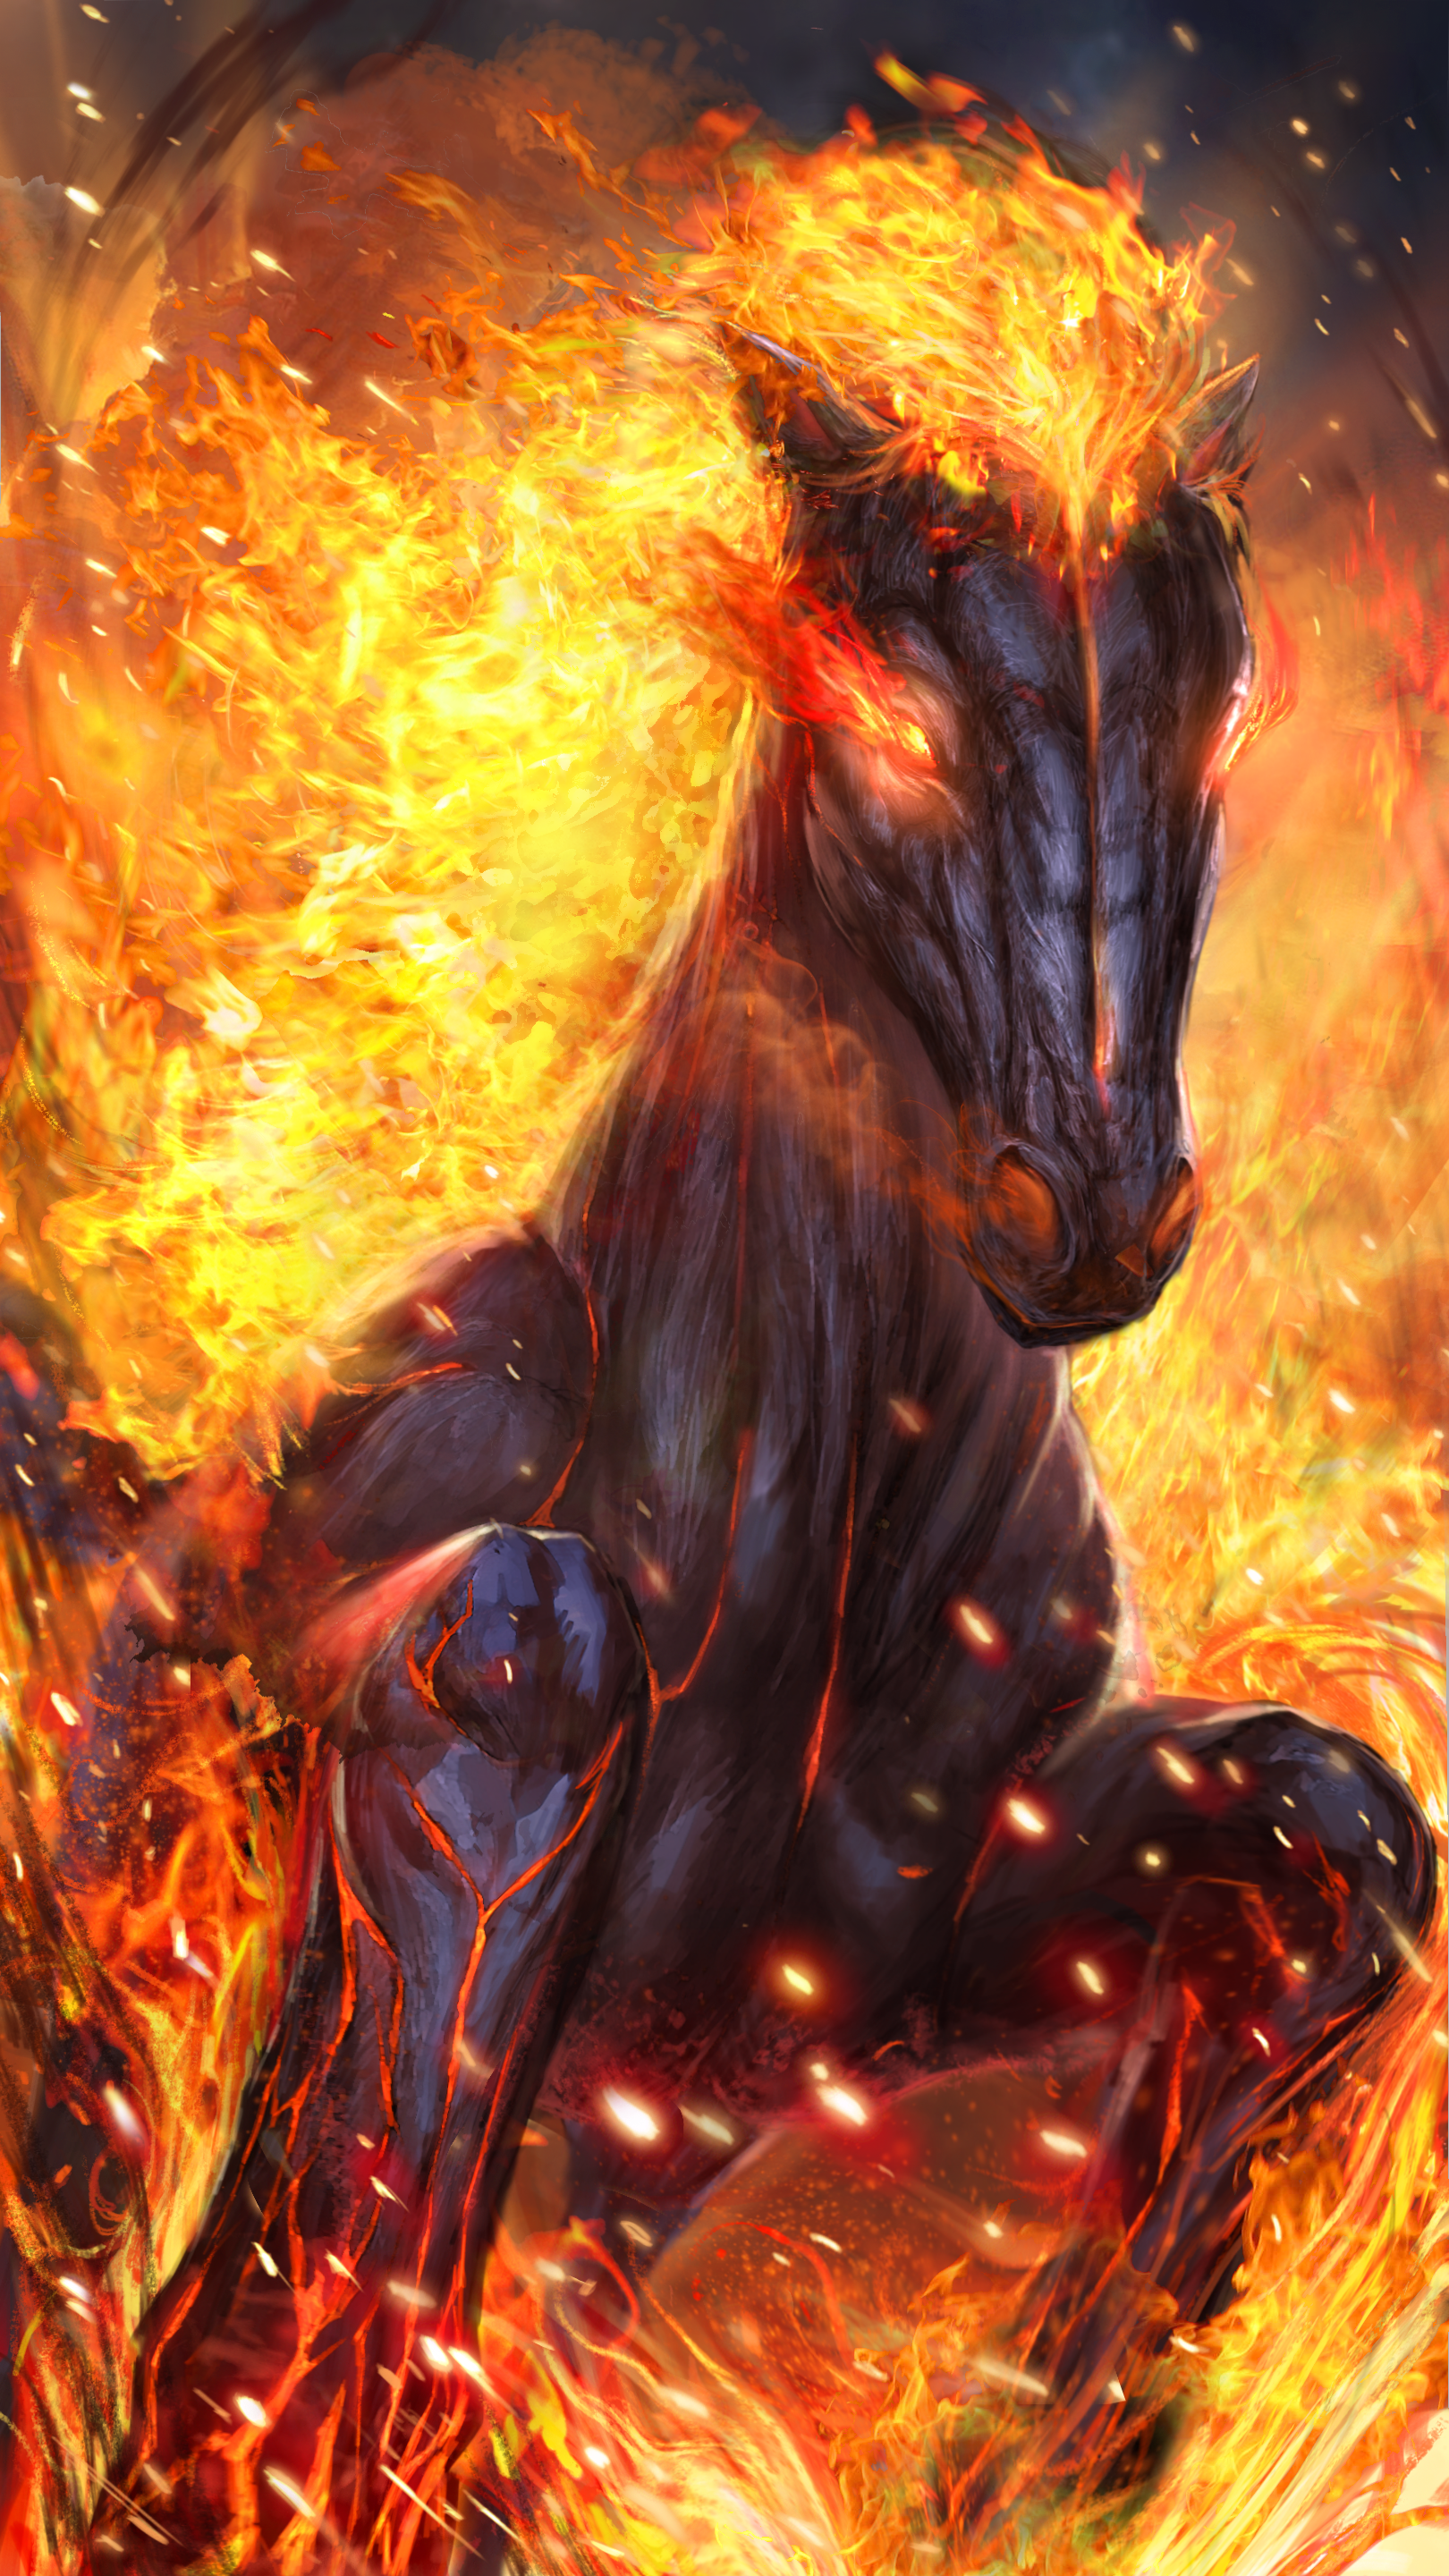 Hot fire horse live wallpaper!. Mythical creatures art, Horses, Fire horse